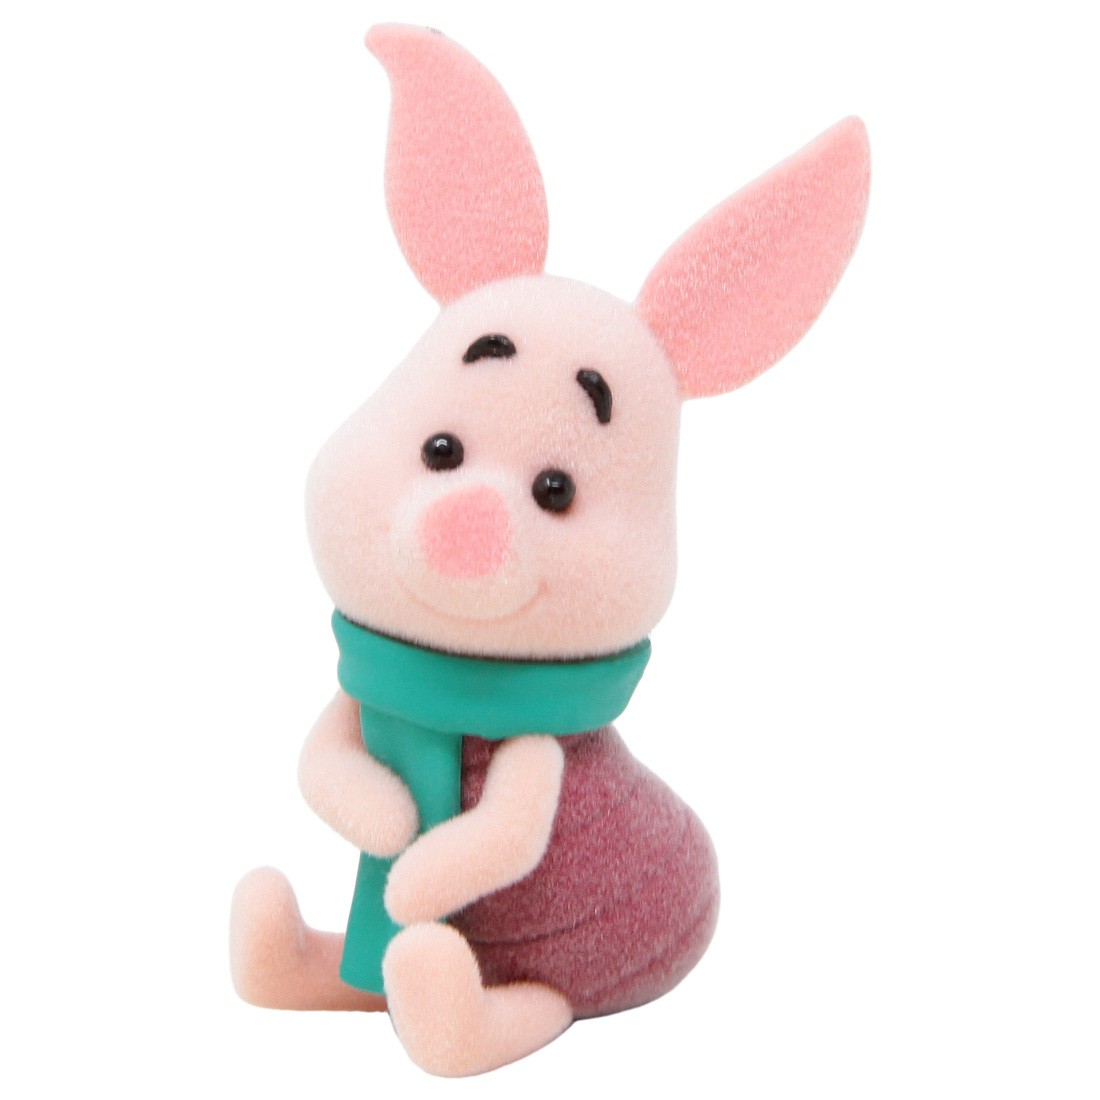 Banpresto Fluffy Puffy Petit Disney Characters Winnie-The-Pooh Vol.2 - Piglet Figure (pink)